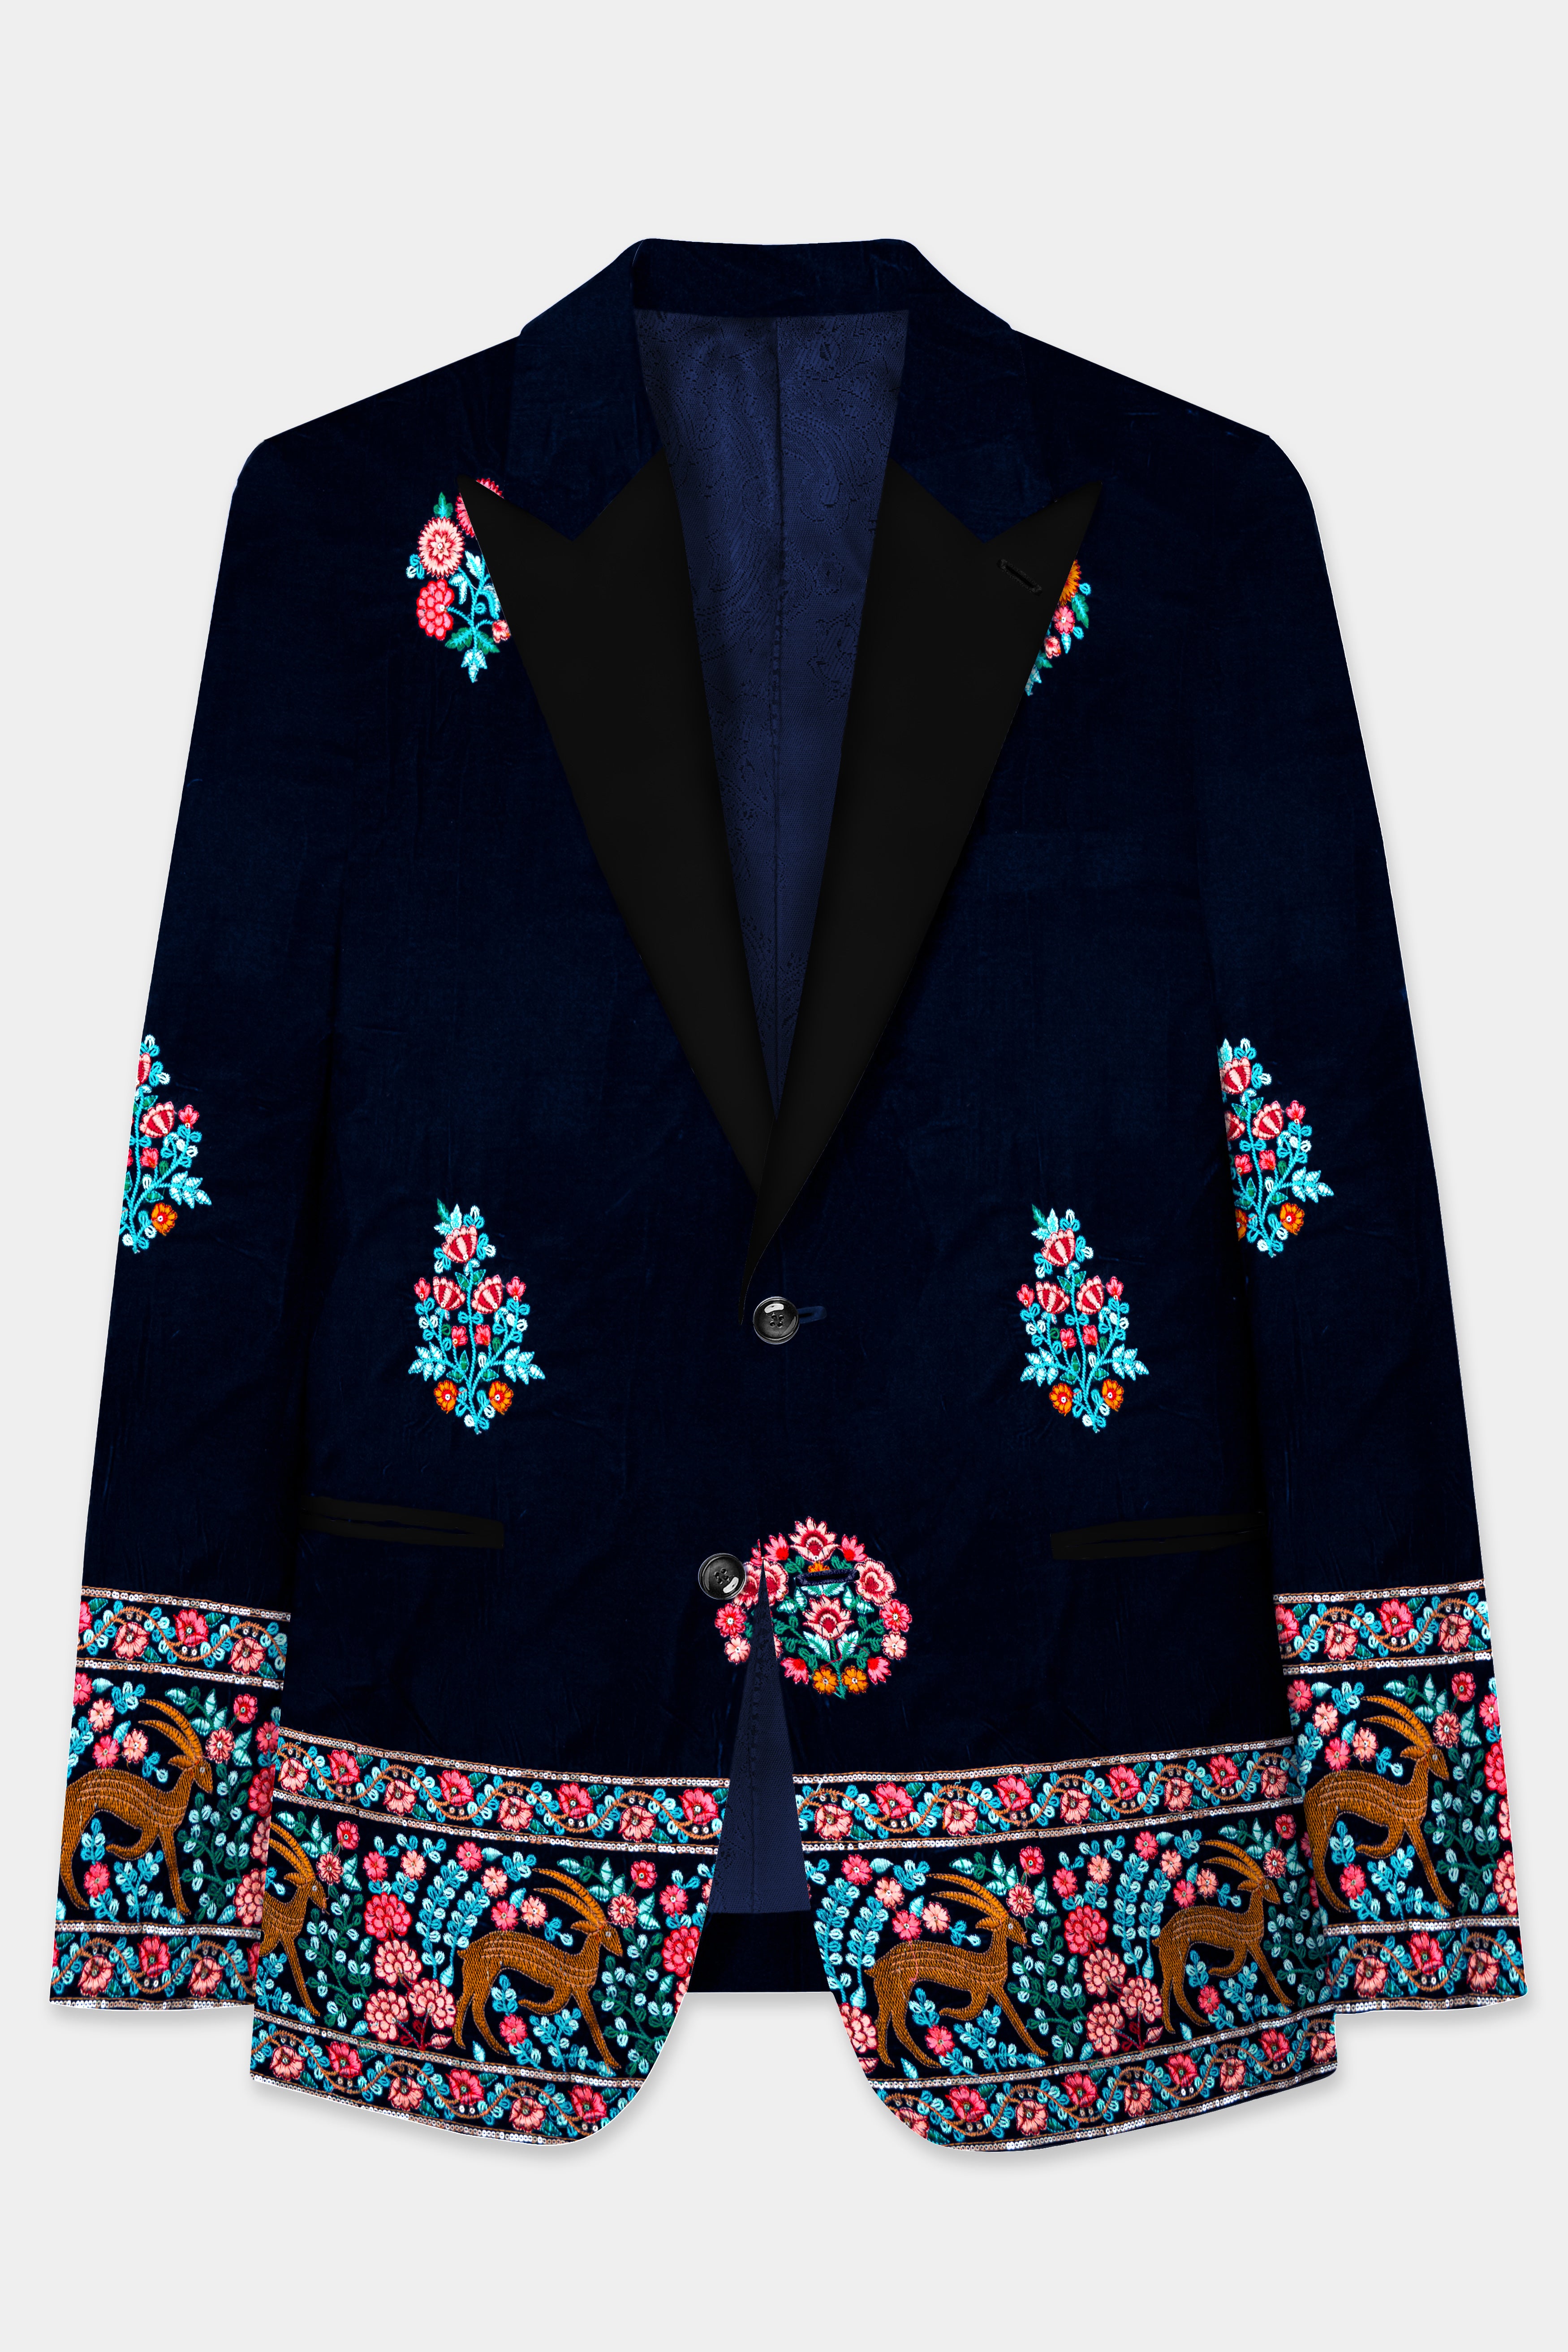 Tealish Blue Embroidered Butta printed Velvet Peak Collar Tuxedo Blazer